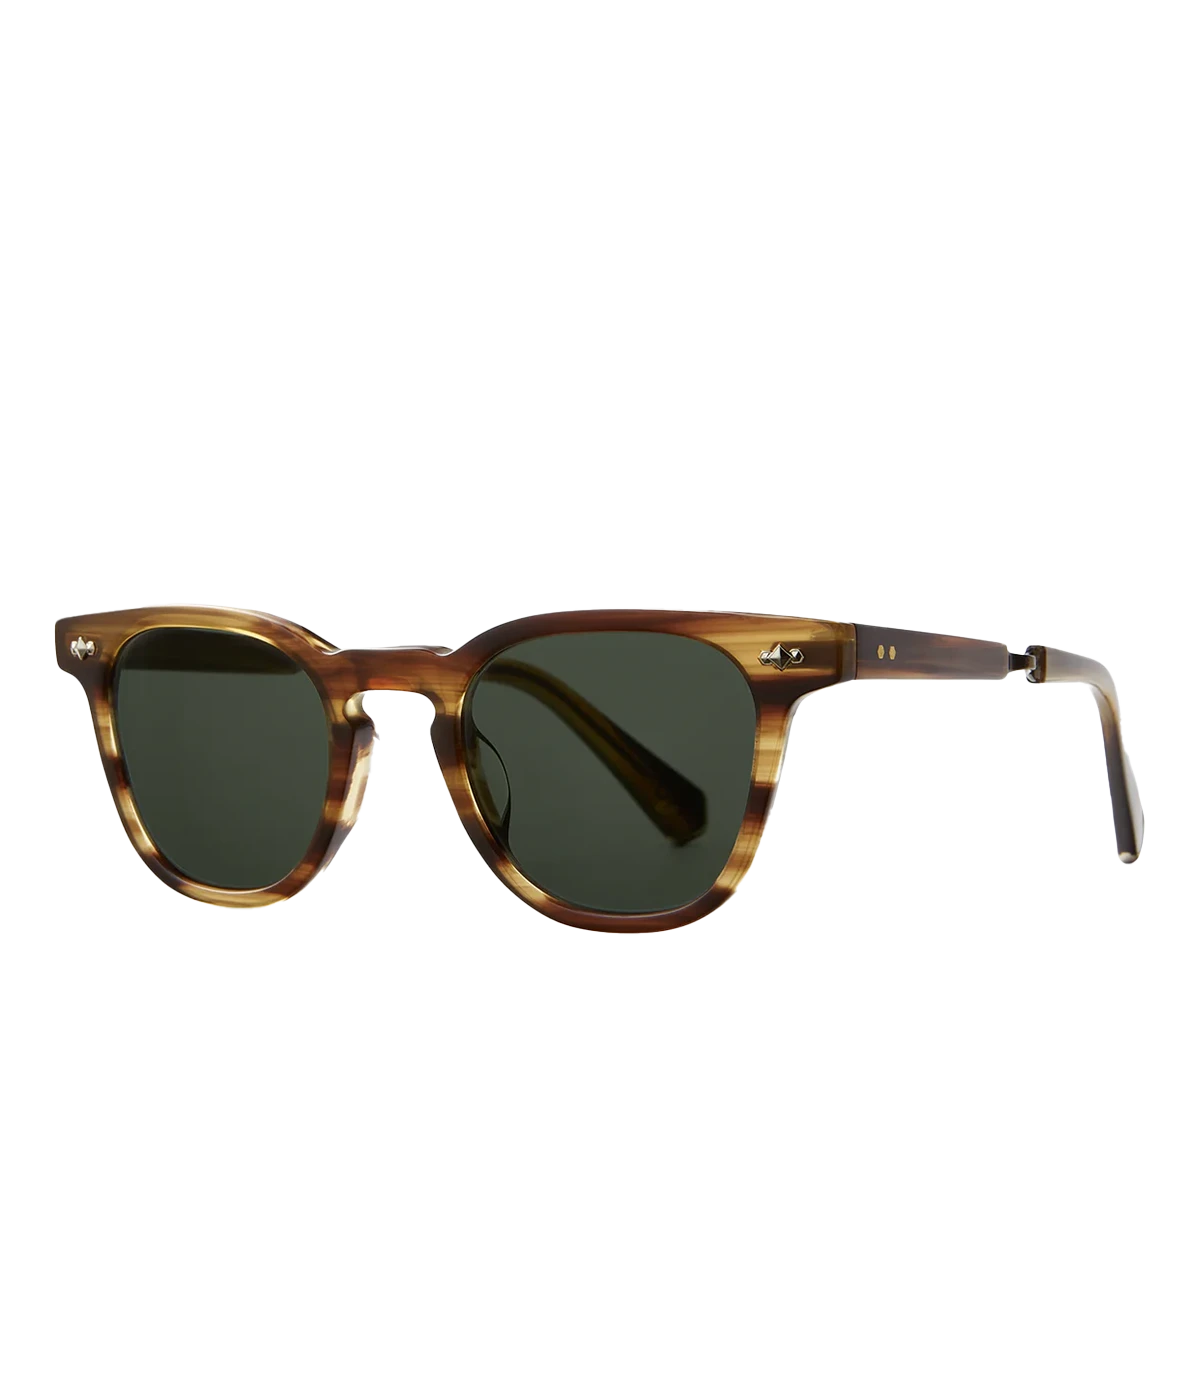 Dean Sun 46 Sunglasses in Koa & White Gold